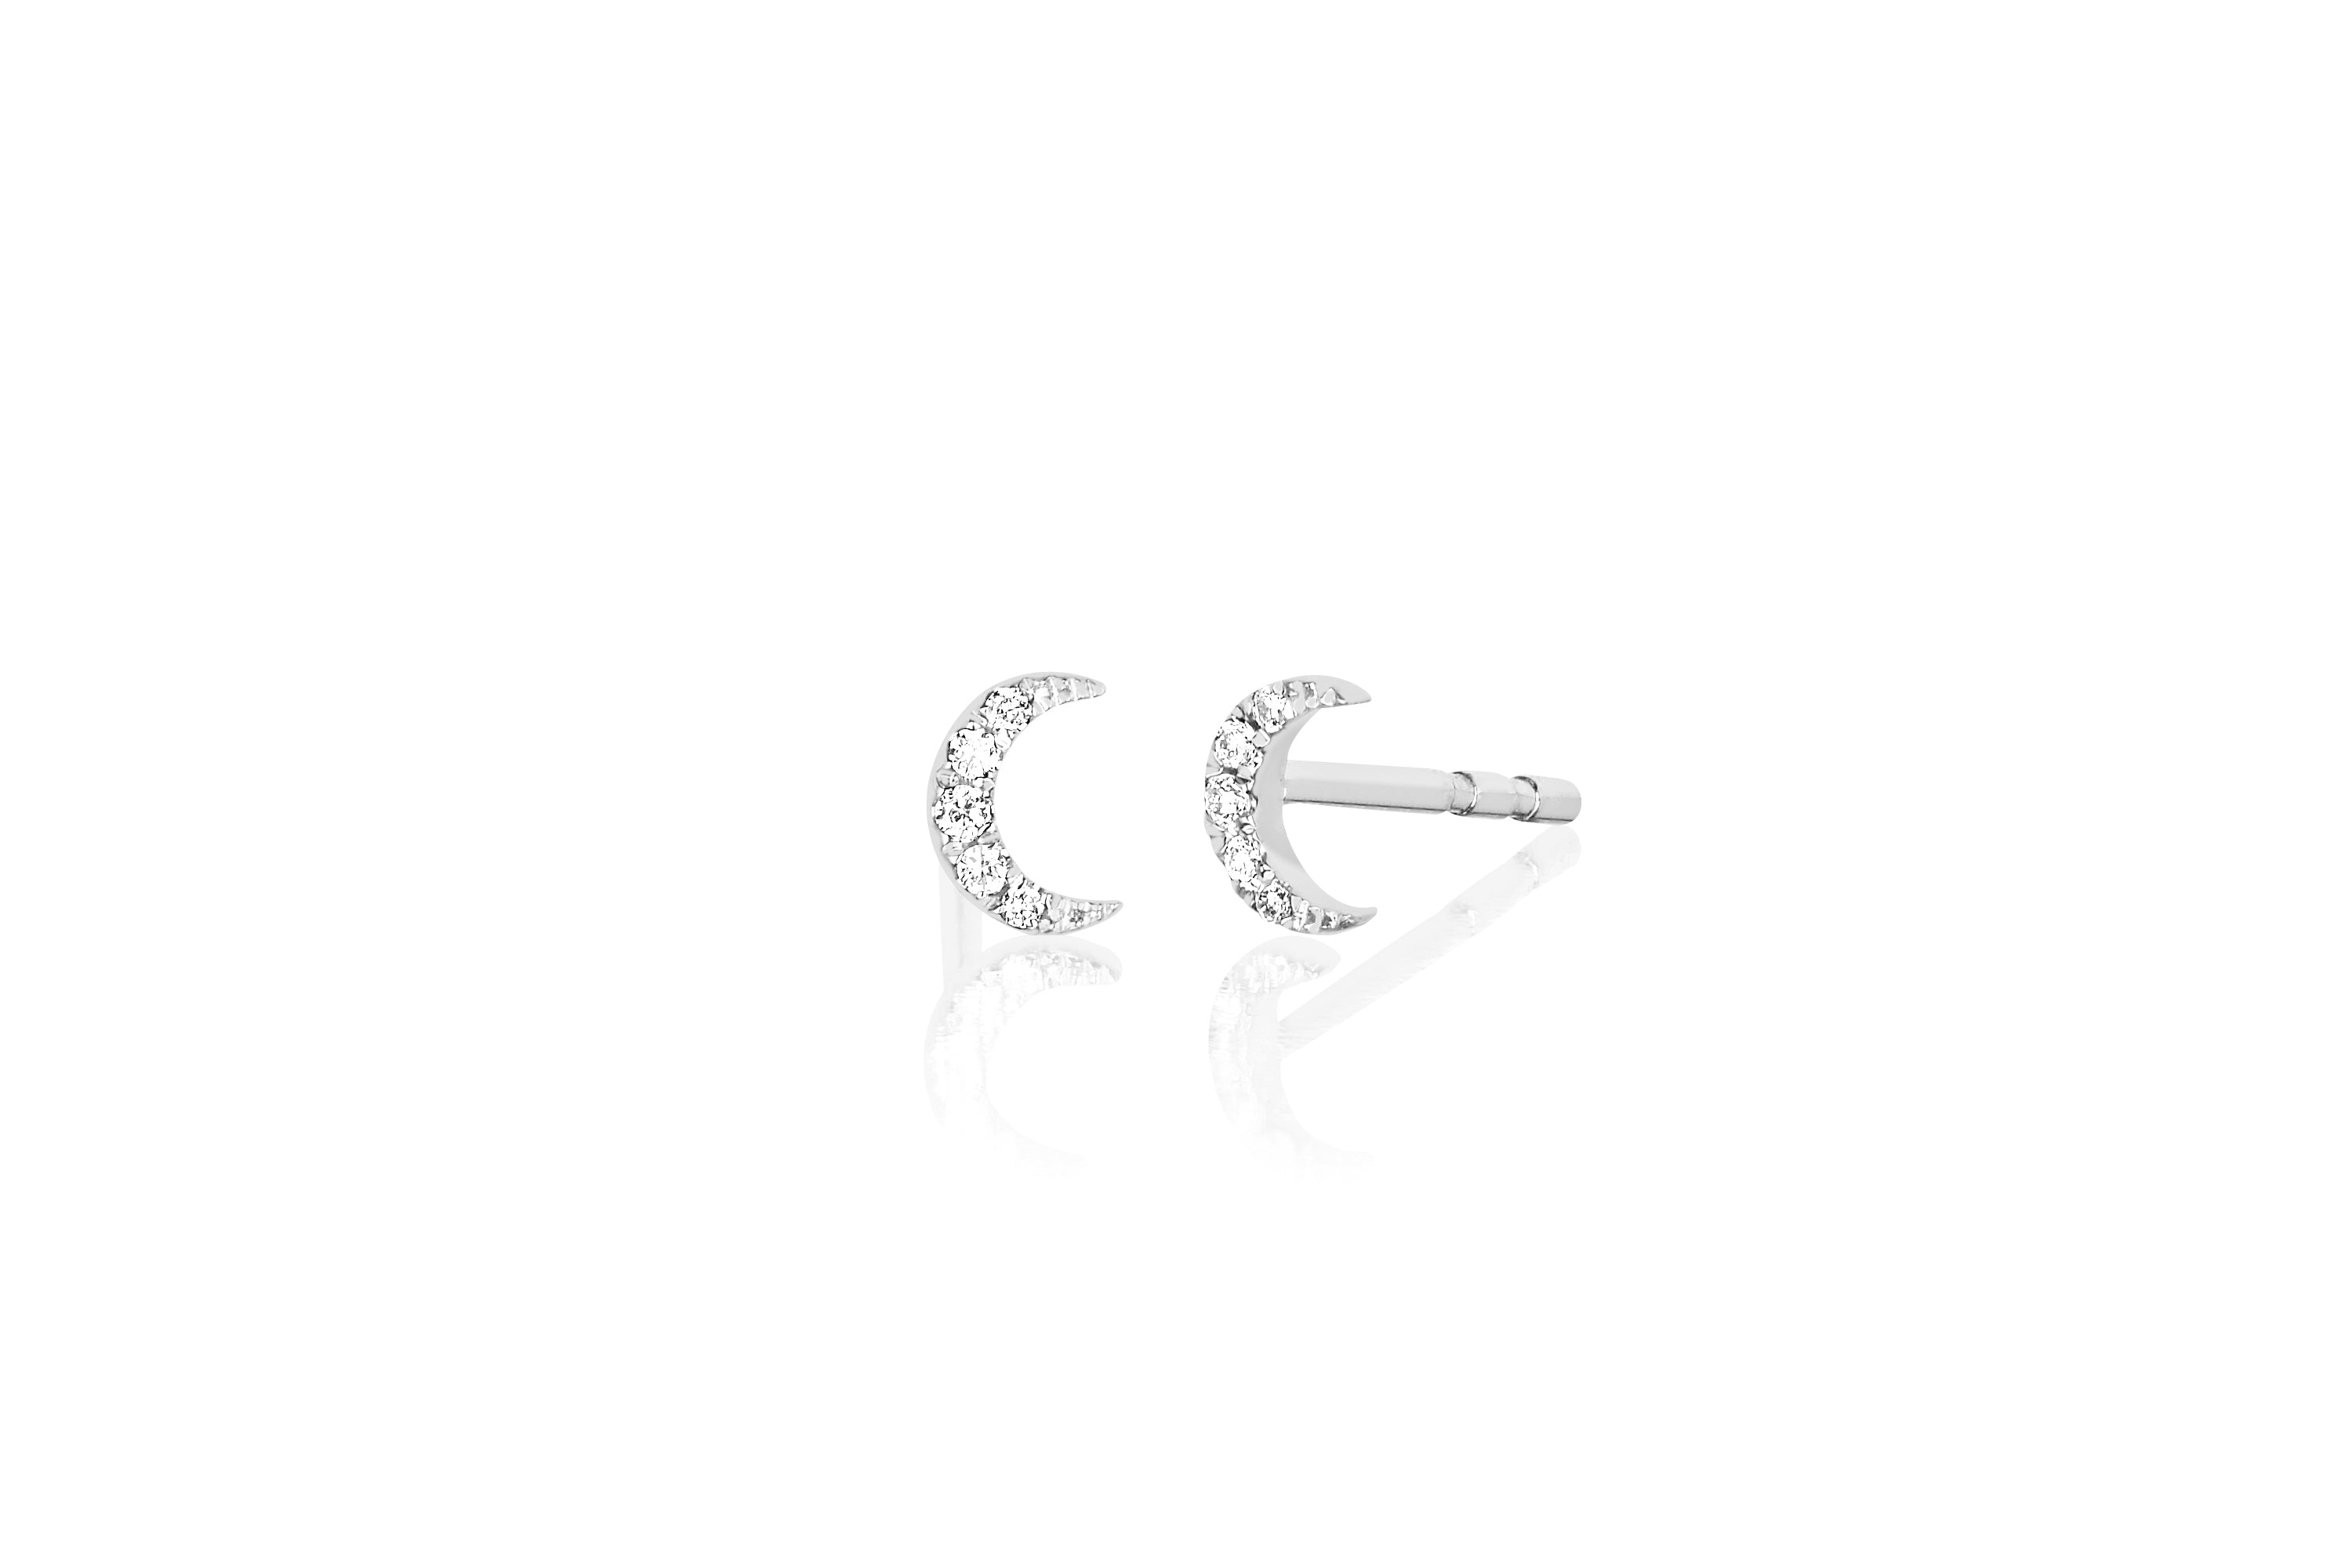 14k (karat) white gold miniature stud earrings with crescent moon shape encrusted in diamonds